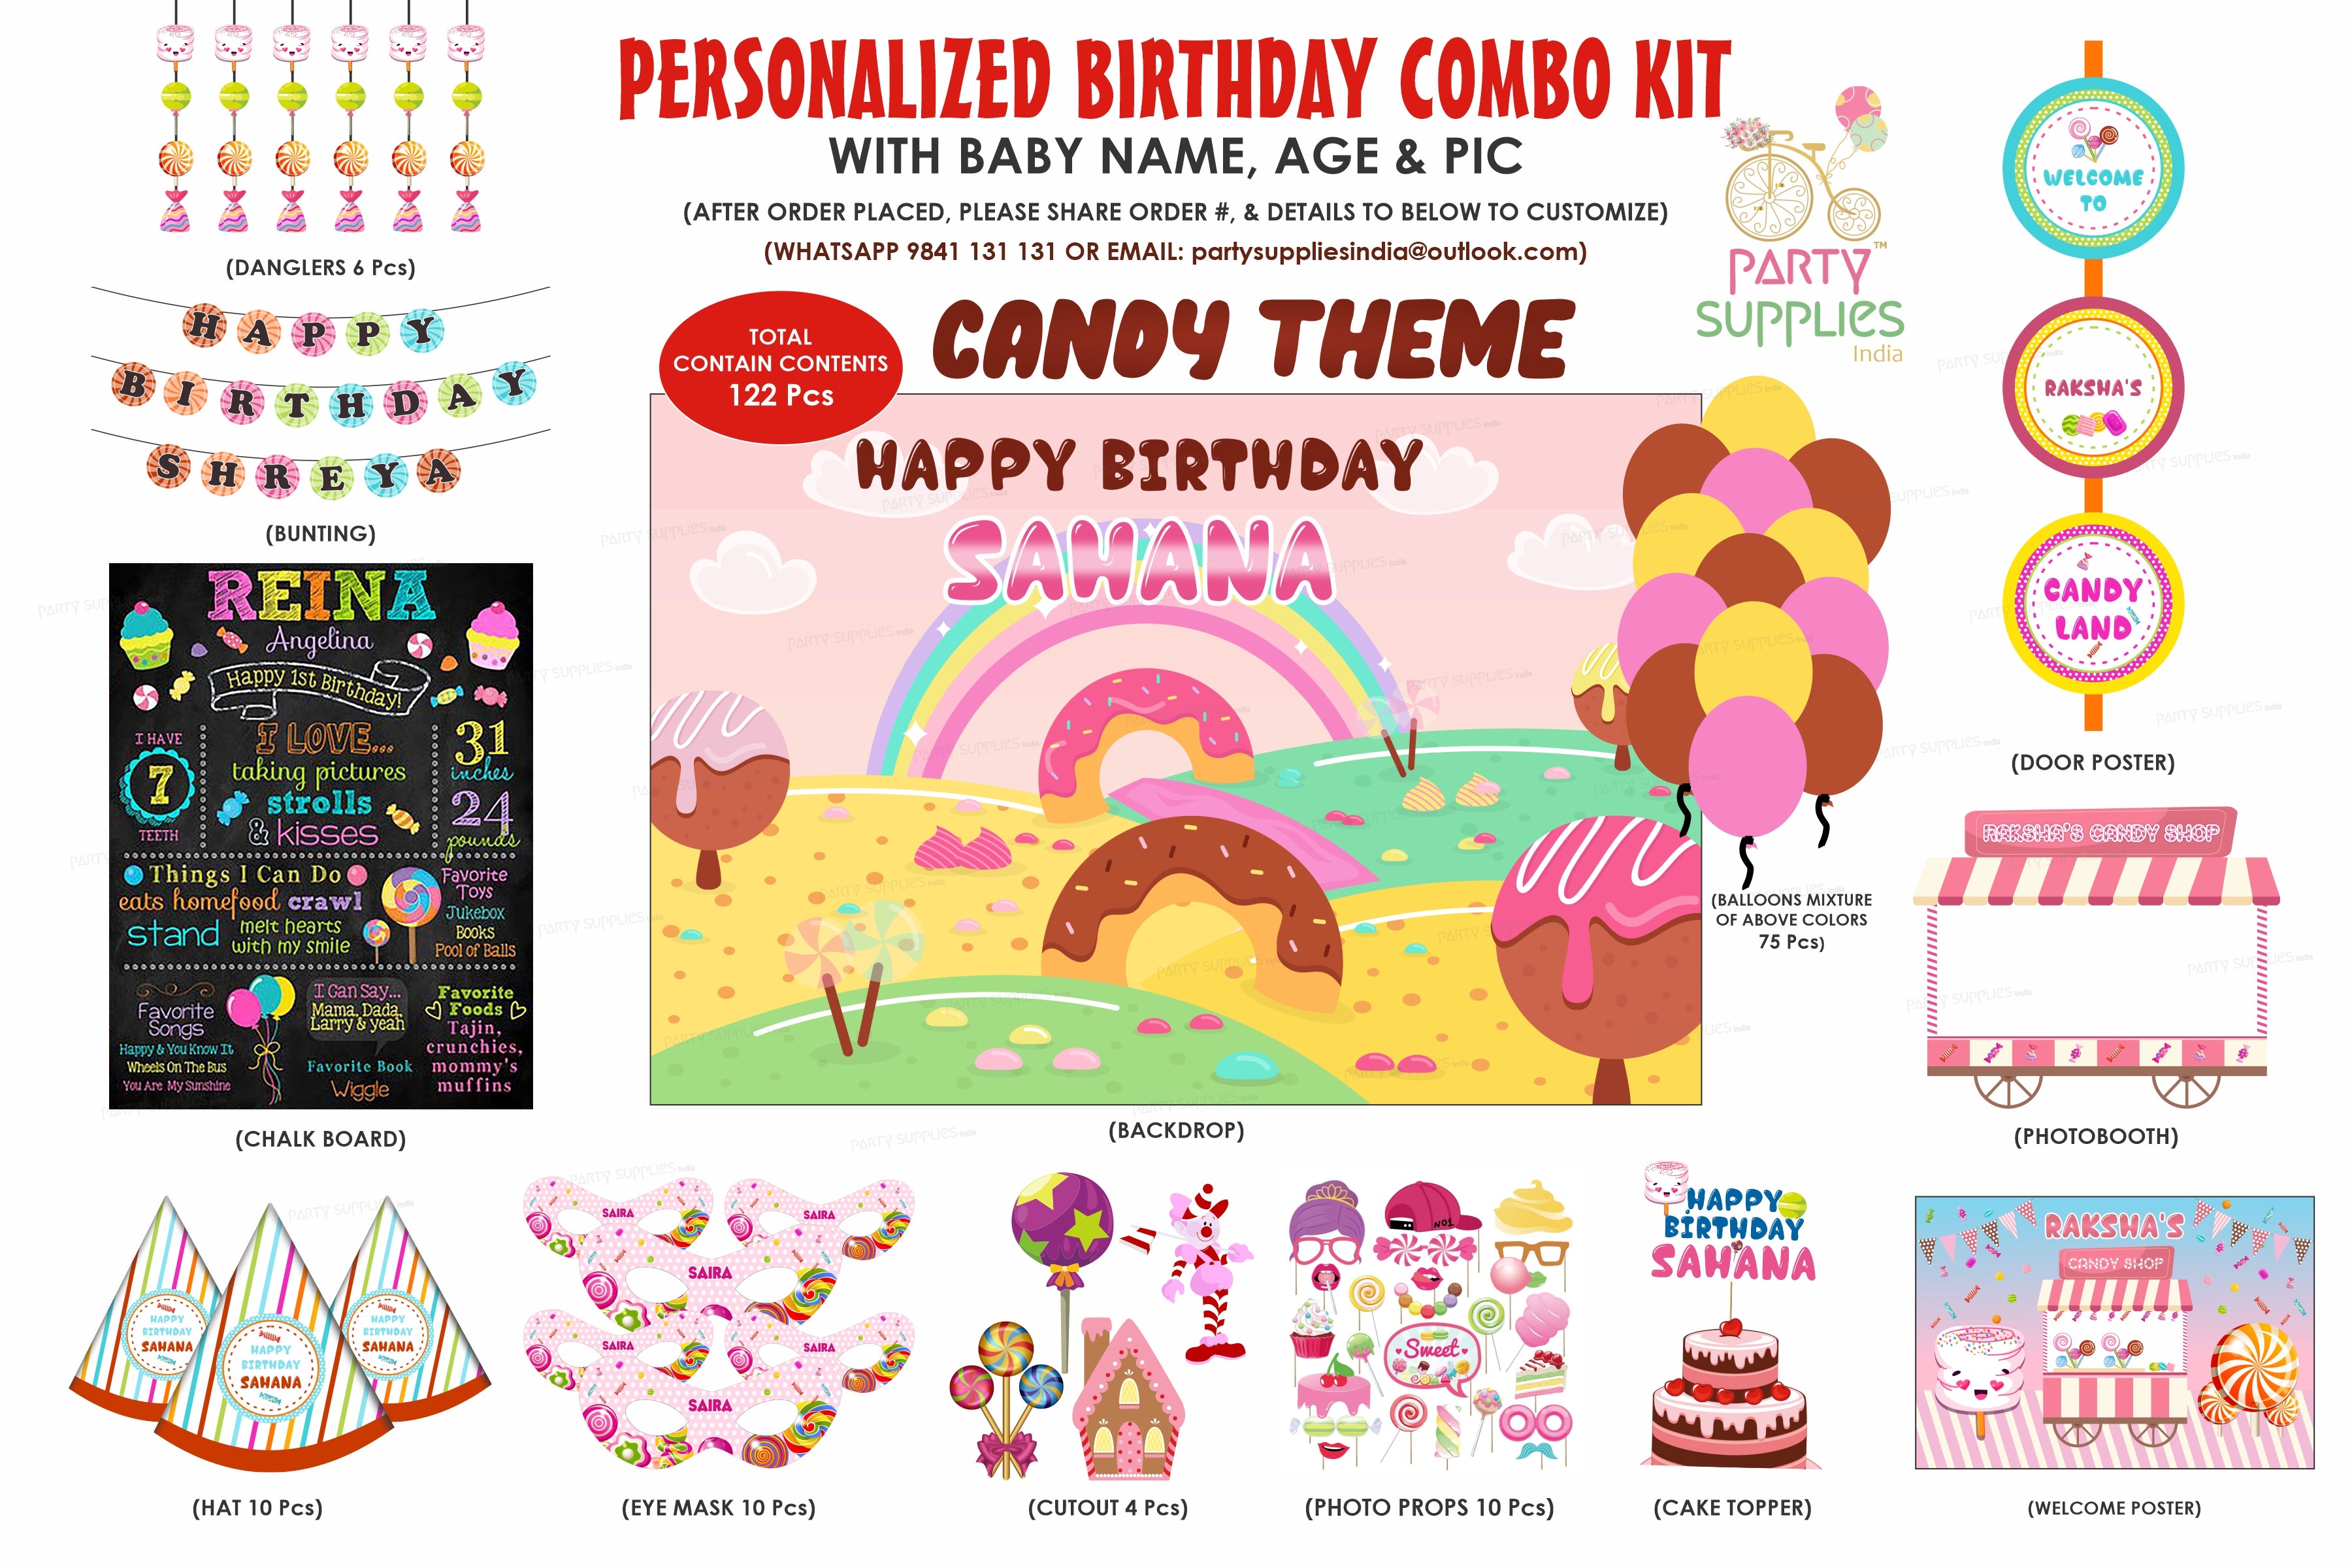 PSI Candy Theme Classic Kit